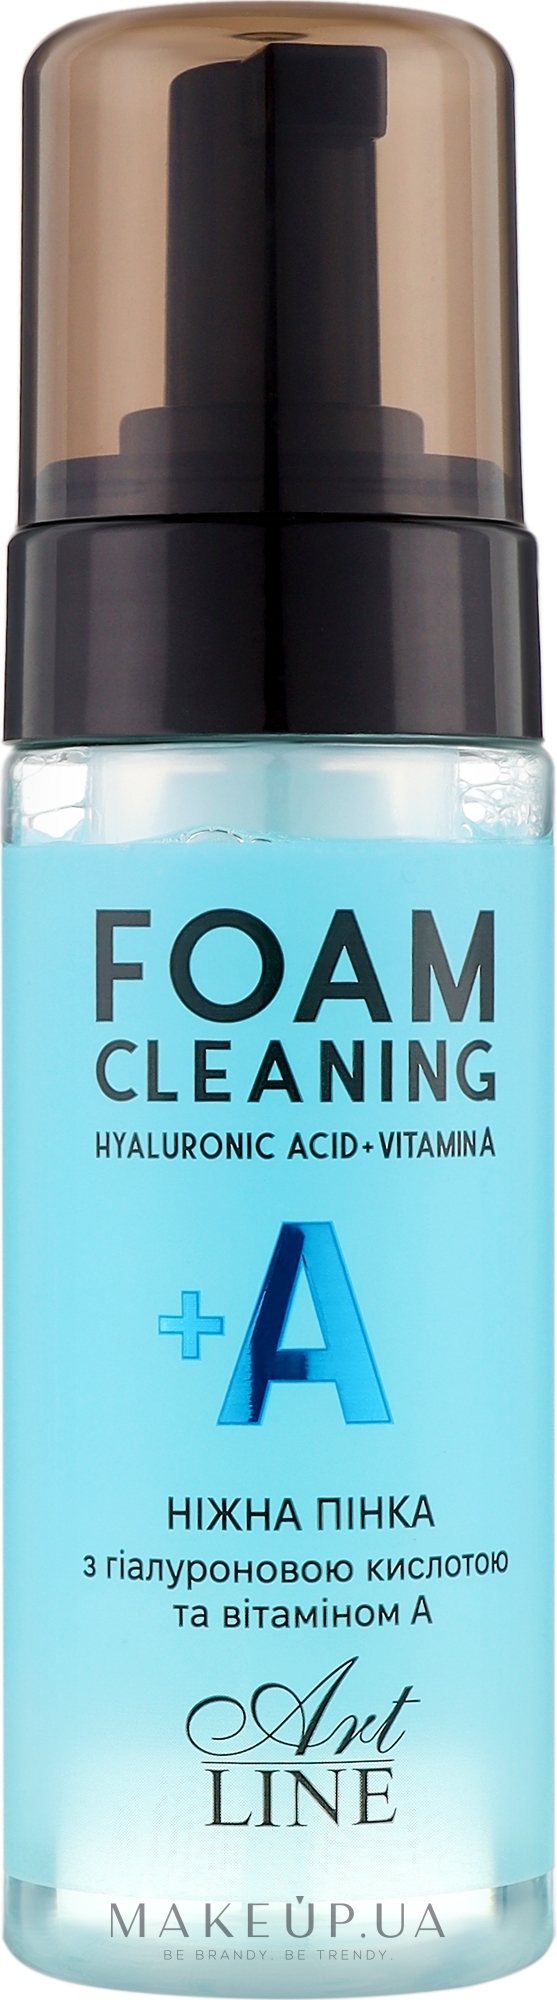 Пенка для очищения кожи лица с гиалуроновой кислотой - Art Line Foam Cleaning Hyaluronic Acid + Vitamin A — фото 150ml